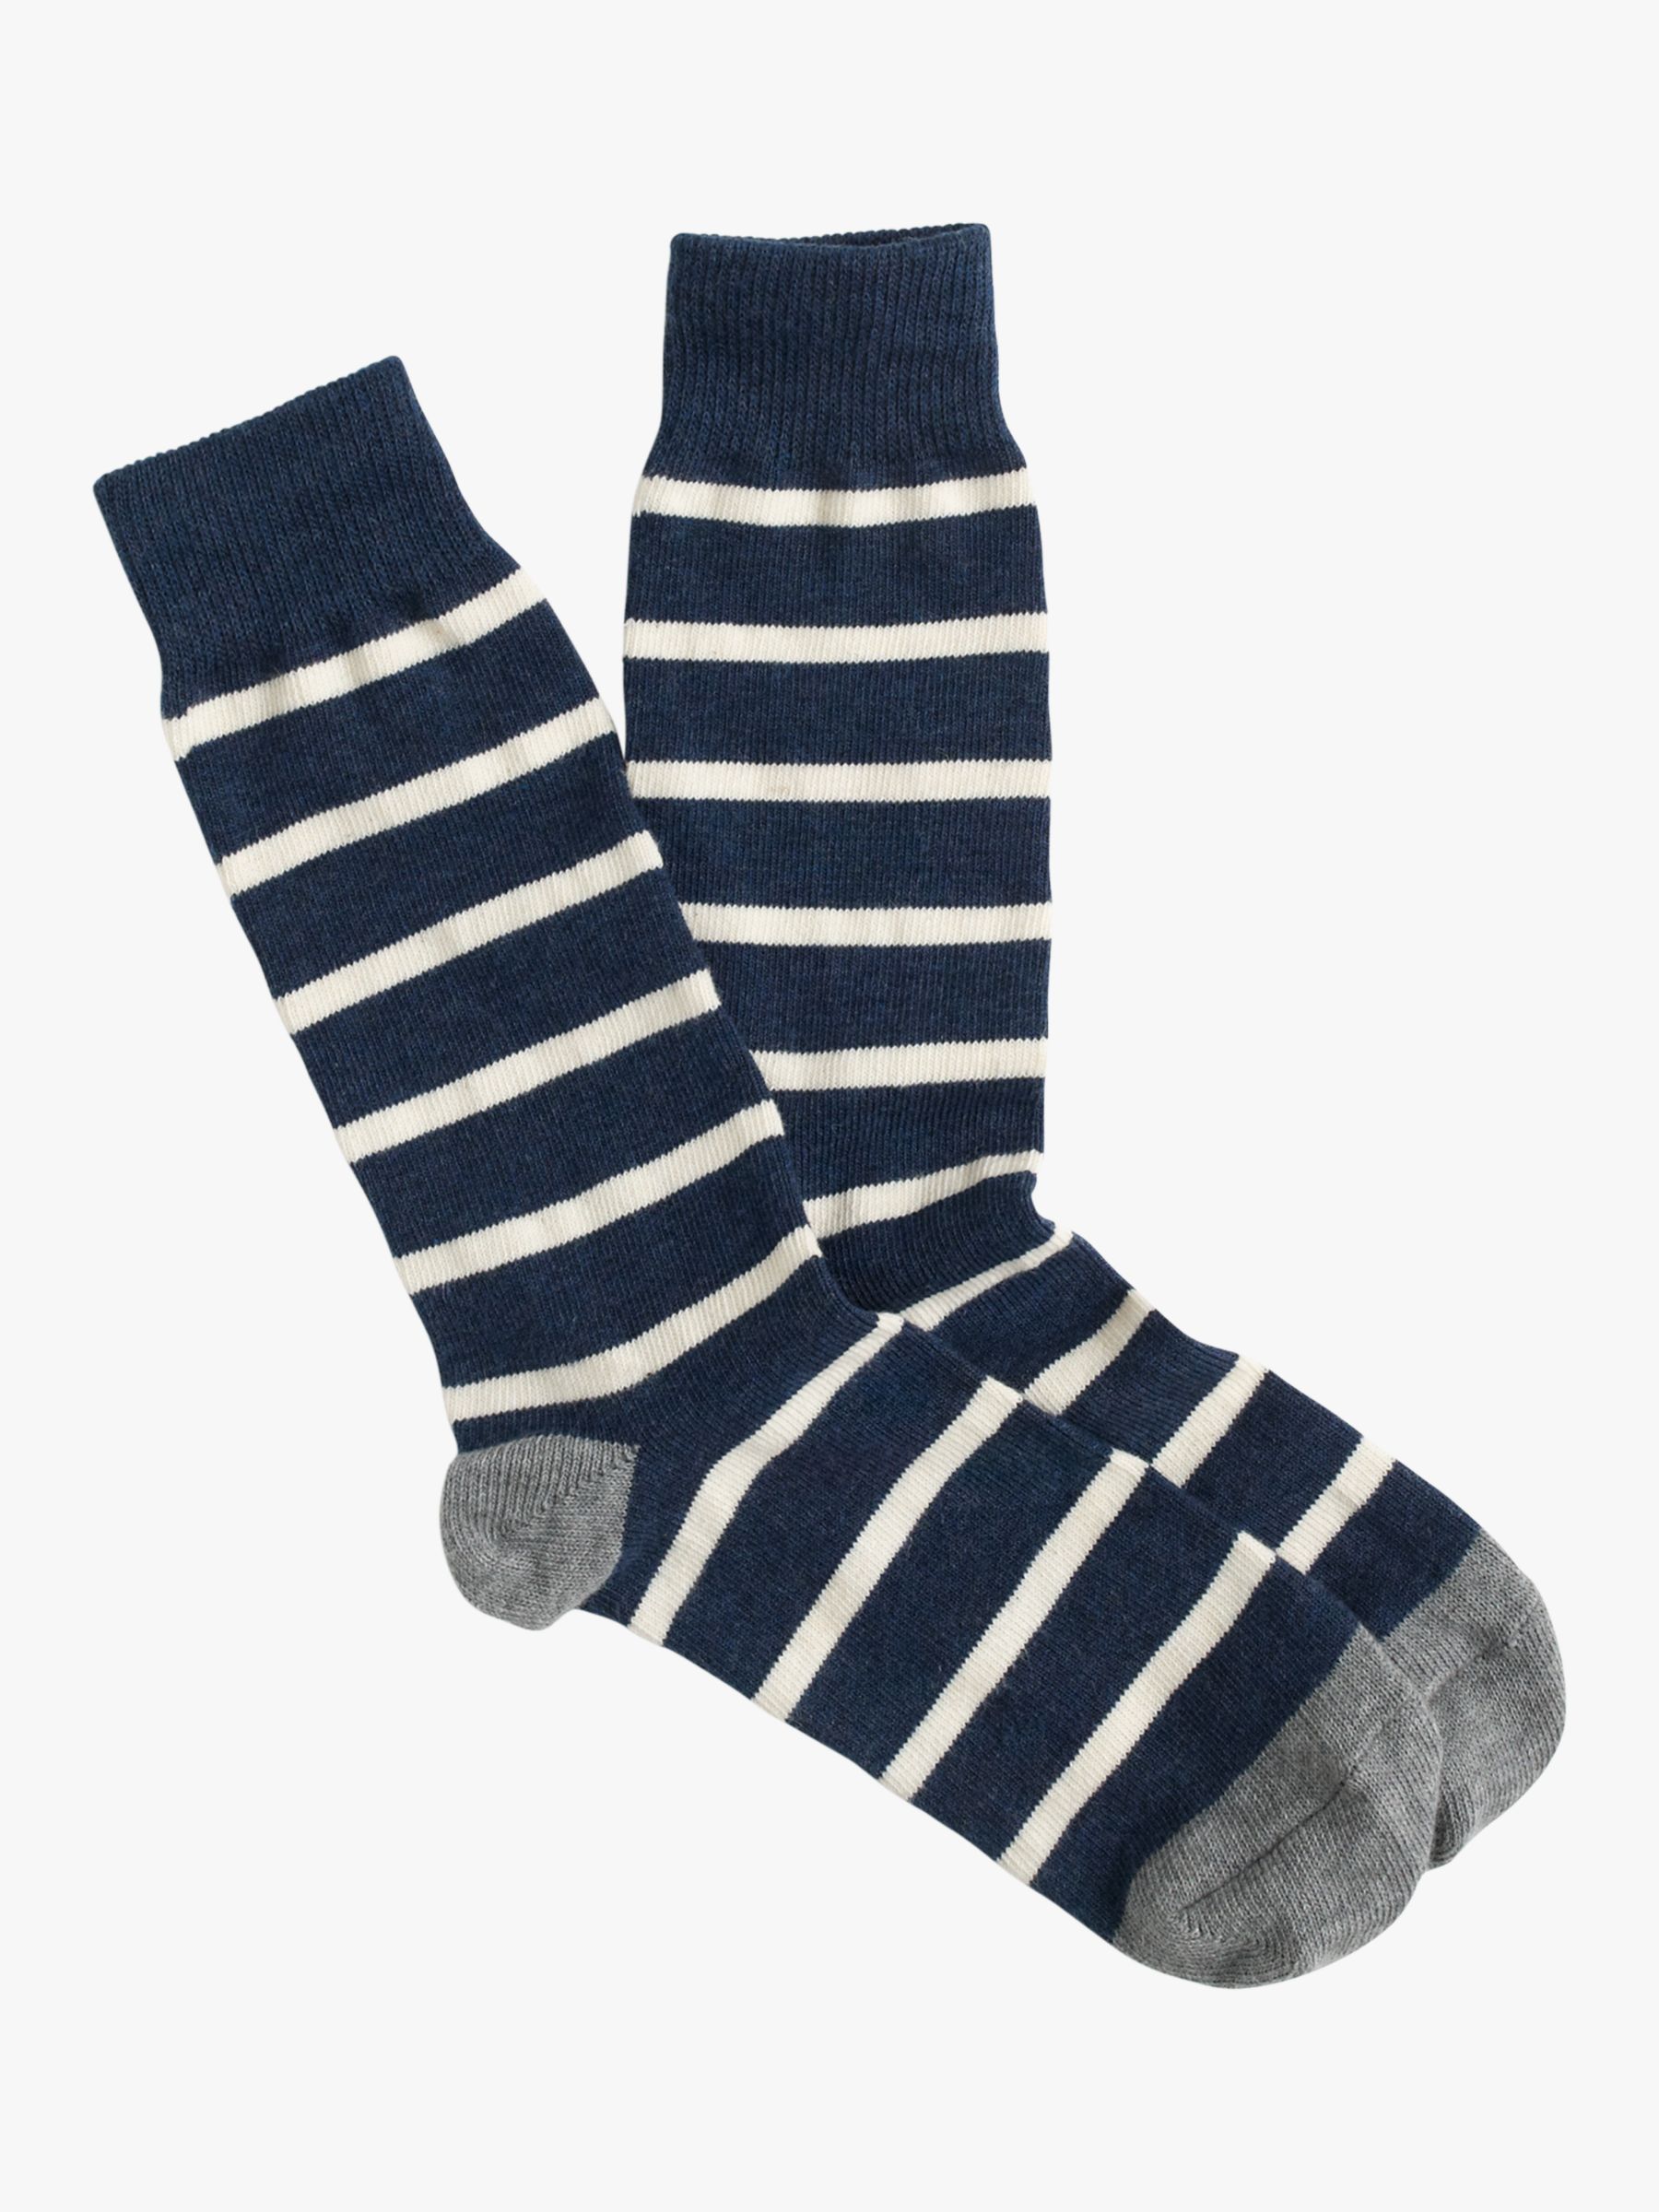 J.Crew Naval Stripe Socks, One Size, Navy/White